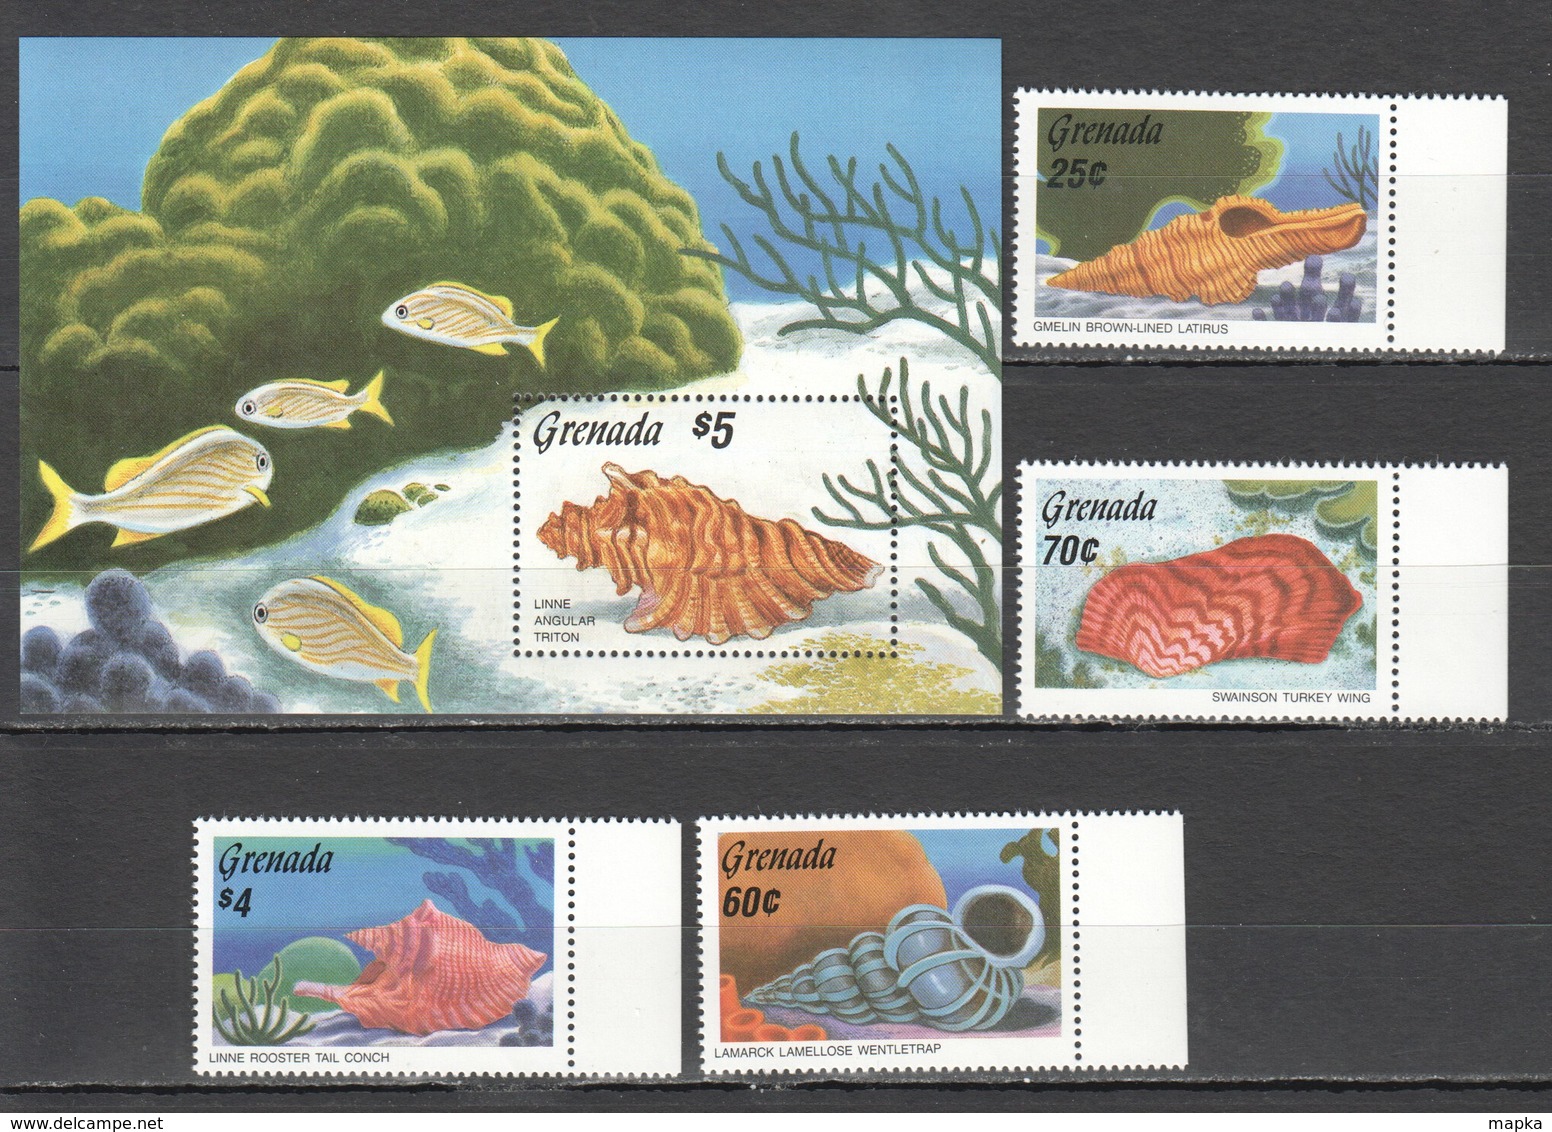 Y706 1986 GRENADA FISH MARINE LIFE SEASHELLS #1485-8 MICHEL 13 EURO BL+SET MNH - Coquillages